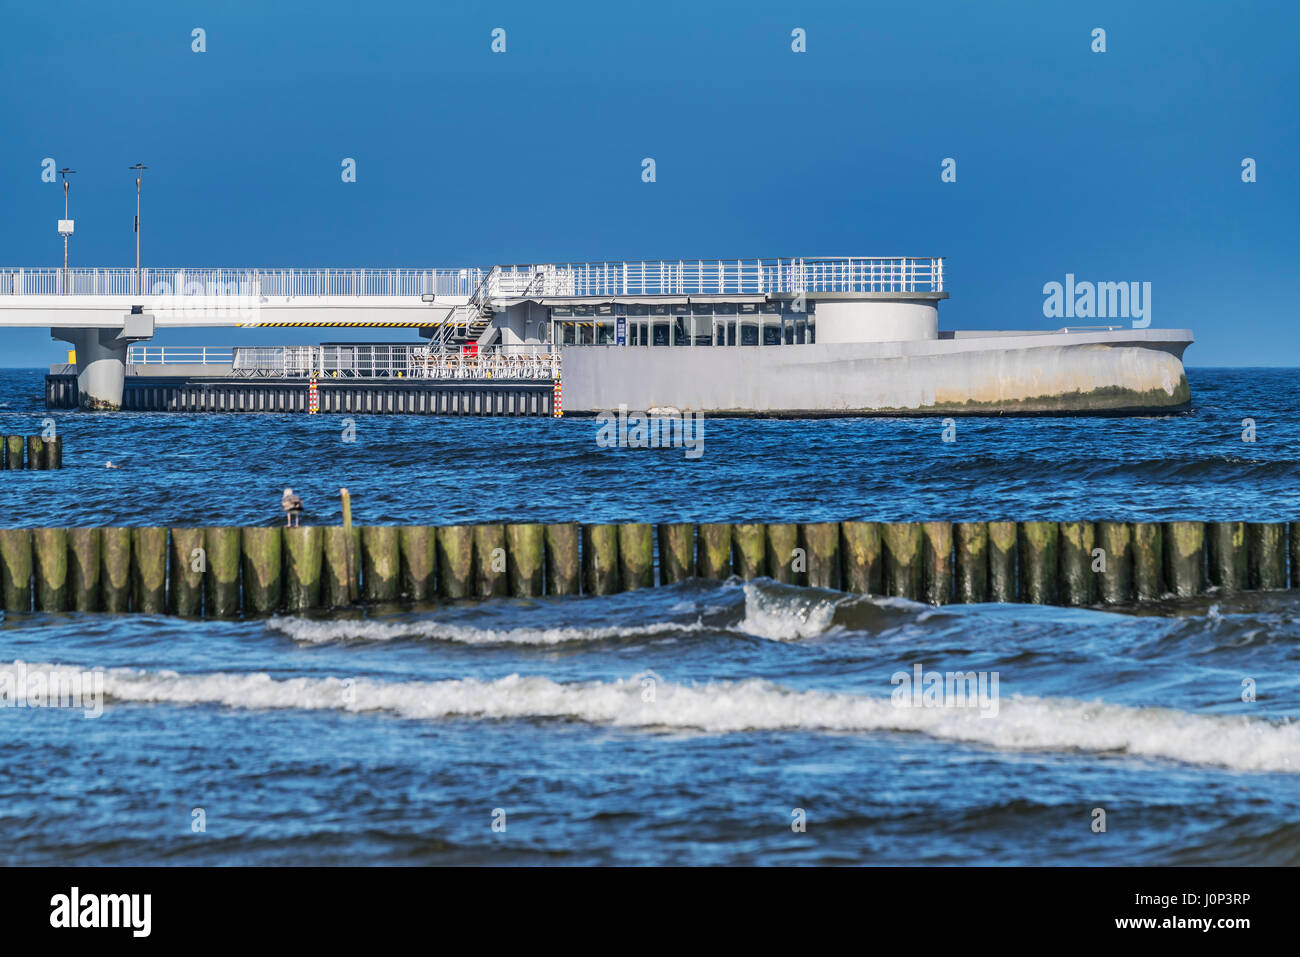 The Kolobrzeg Pier is a pier at the Baltic Sea. The pier is 230 meters long. It was built in 1973, Kolobrzeg, West Pomeranian, Poland, Europe Stock Photo